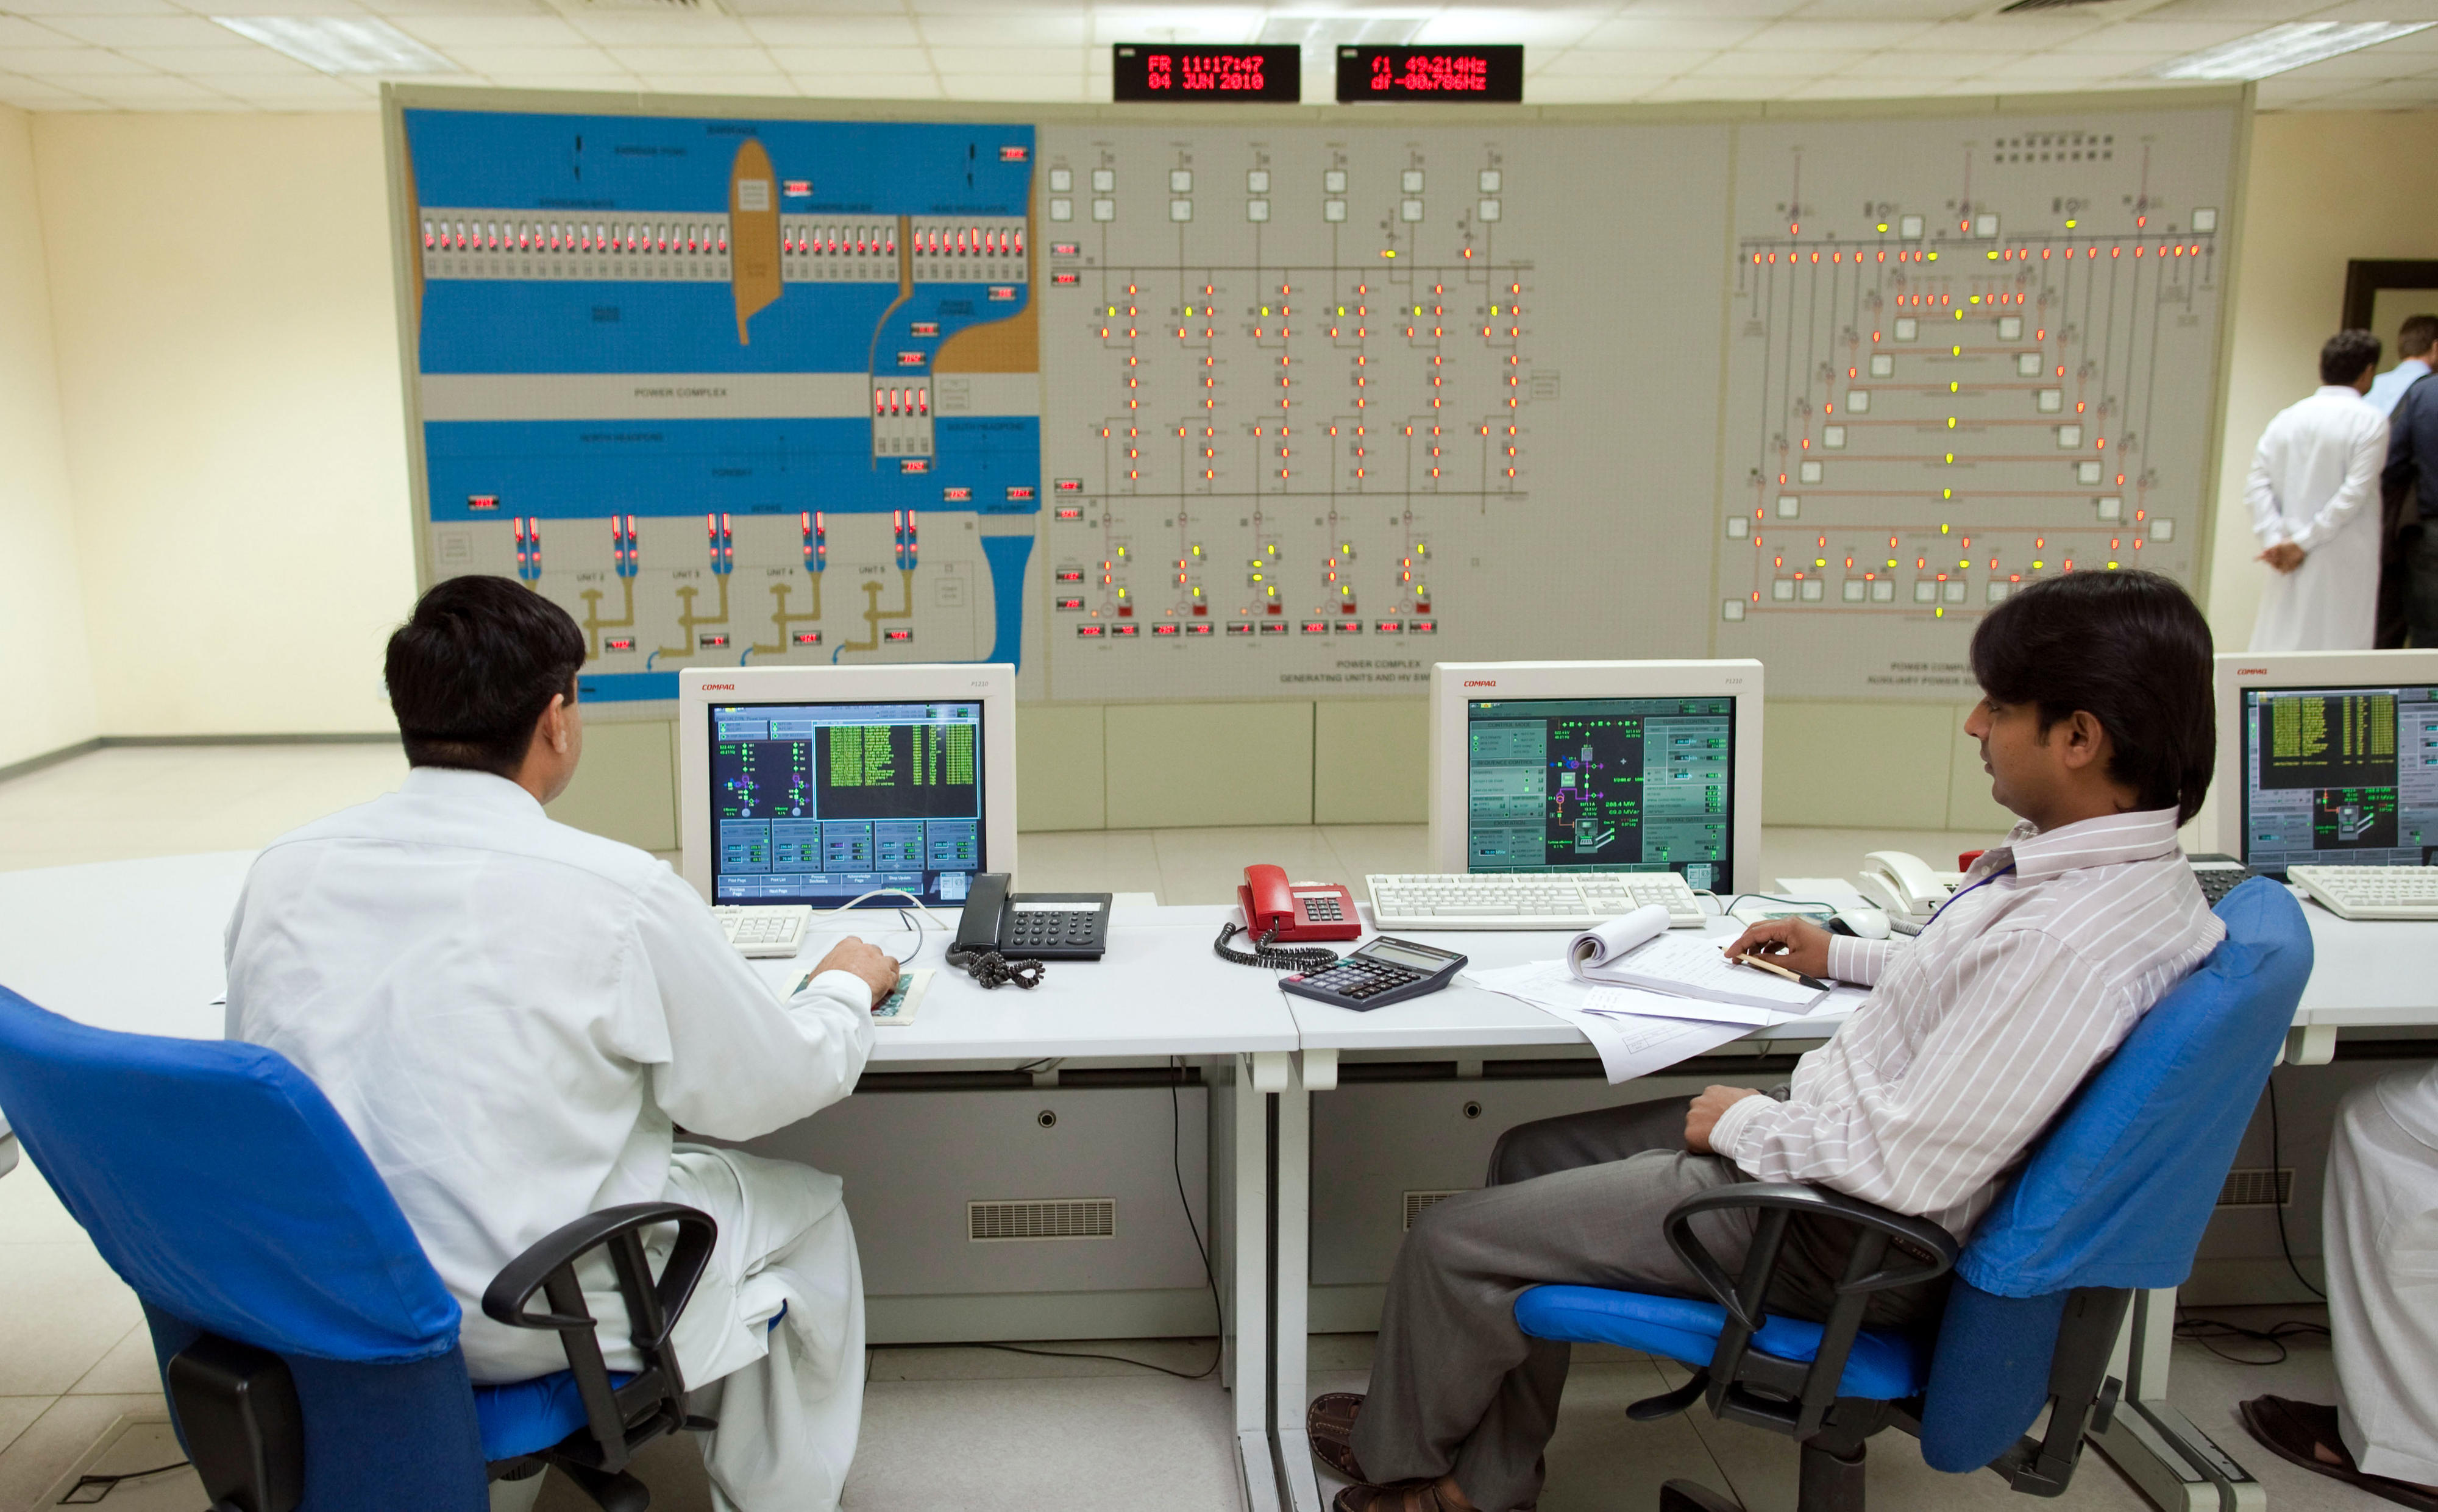 Control centre of the hydropower plant Ghazi Barotha, Pakistan